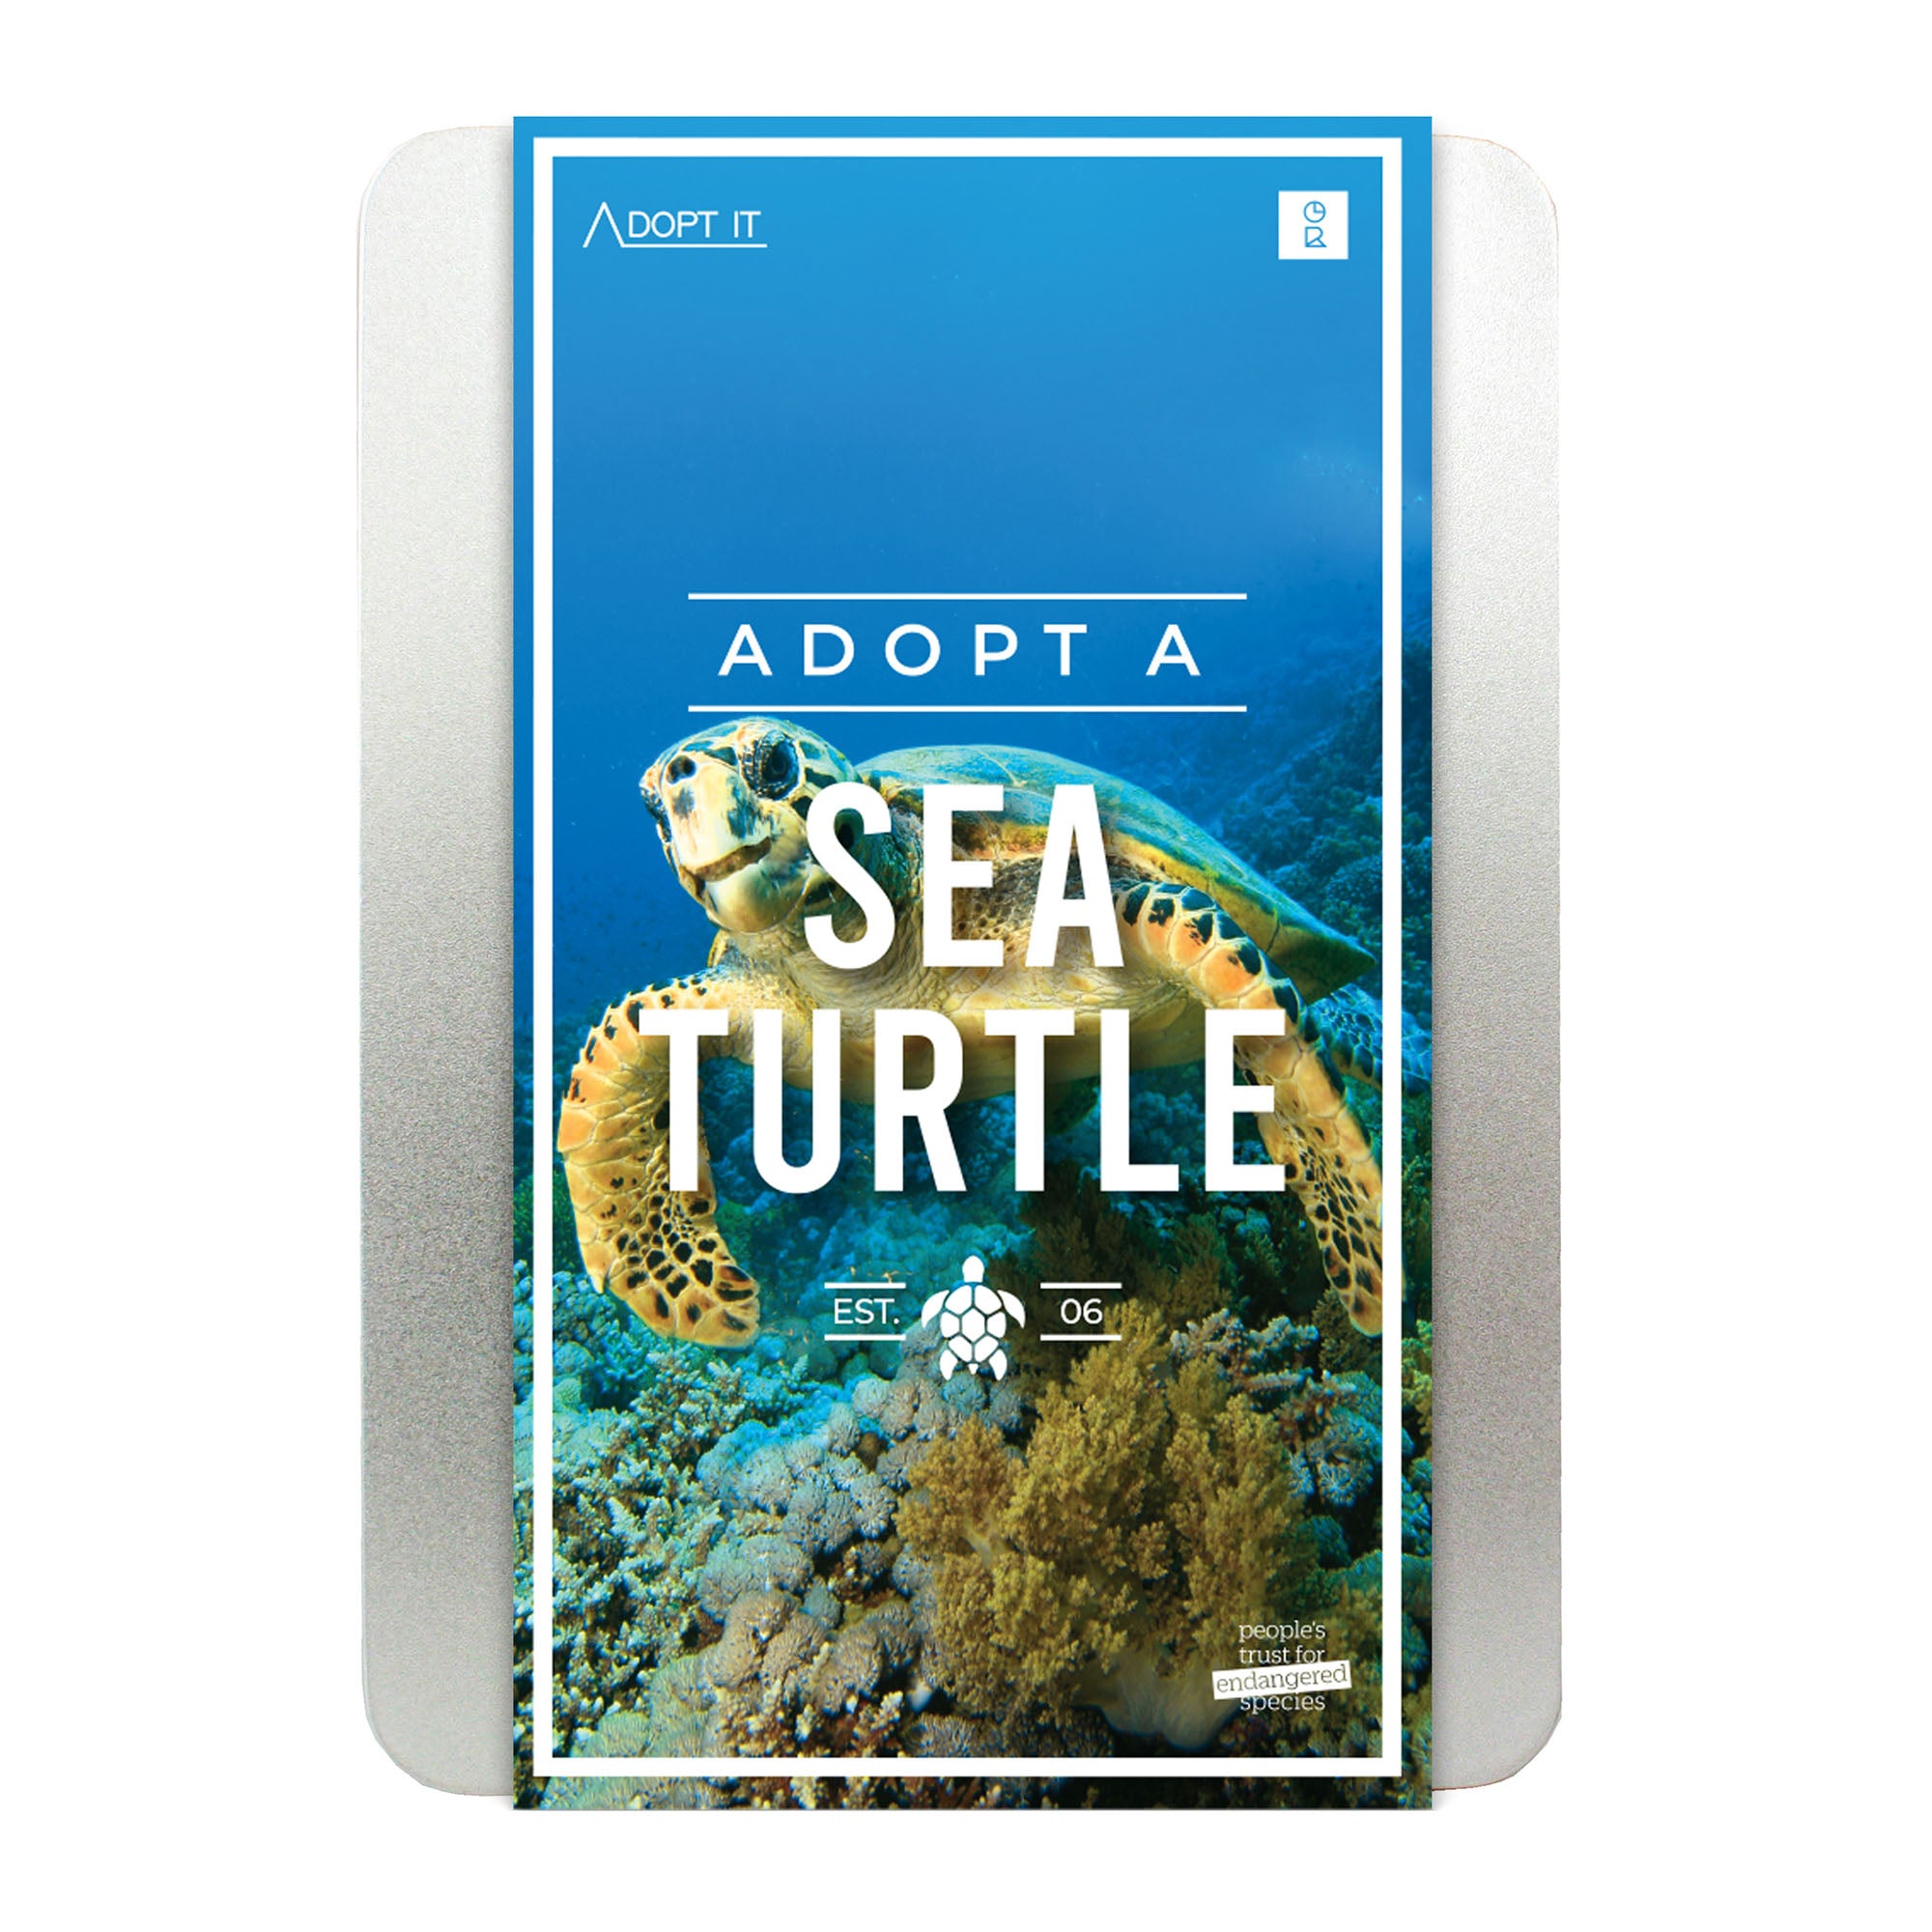 People's Trust For Endangered Species Adoption Kit - Sea Turtle